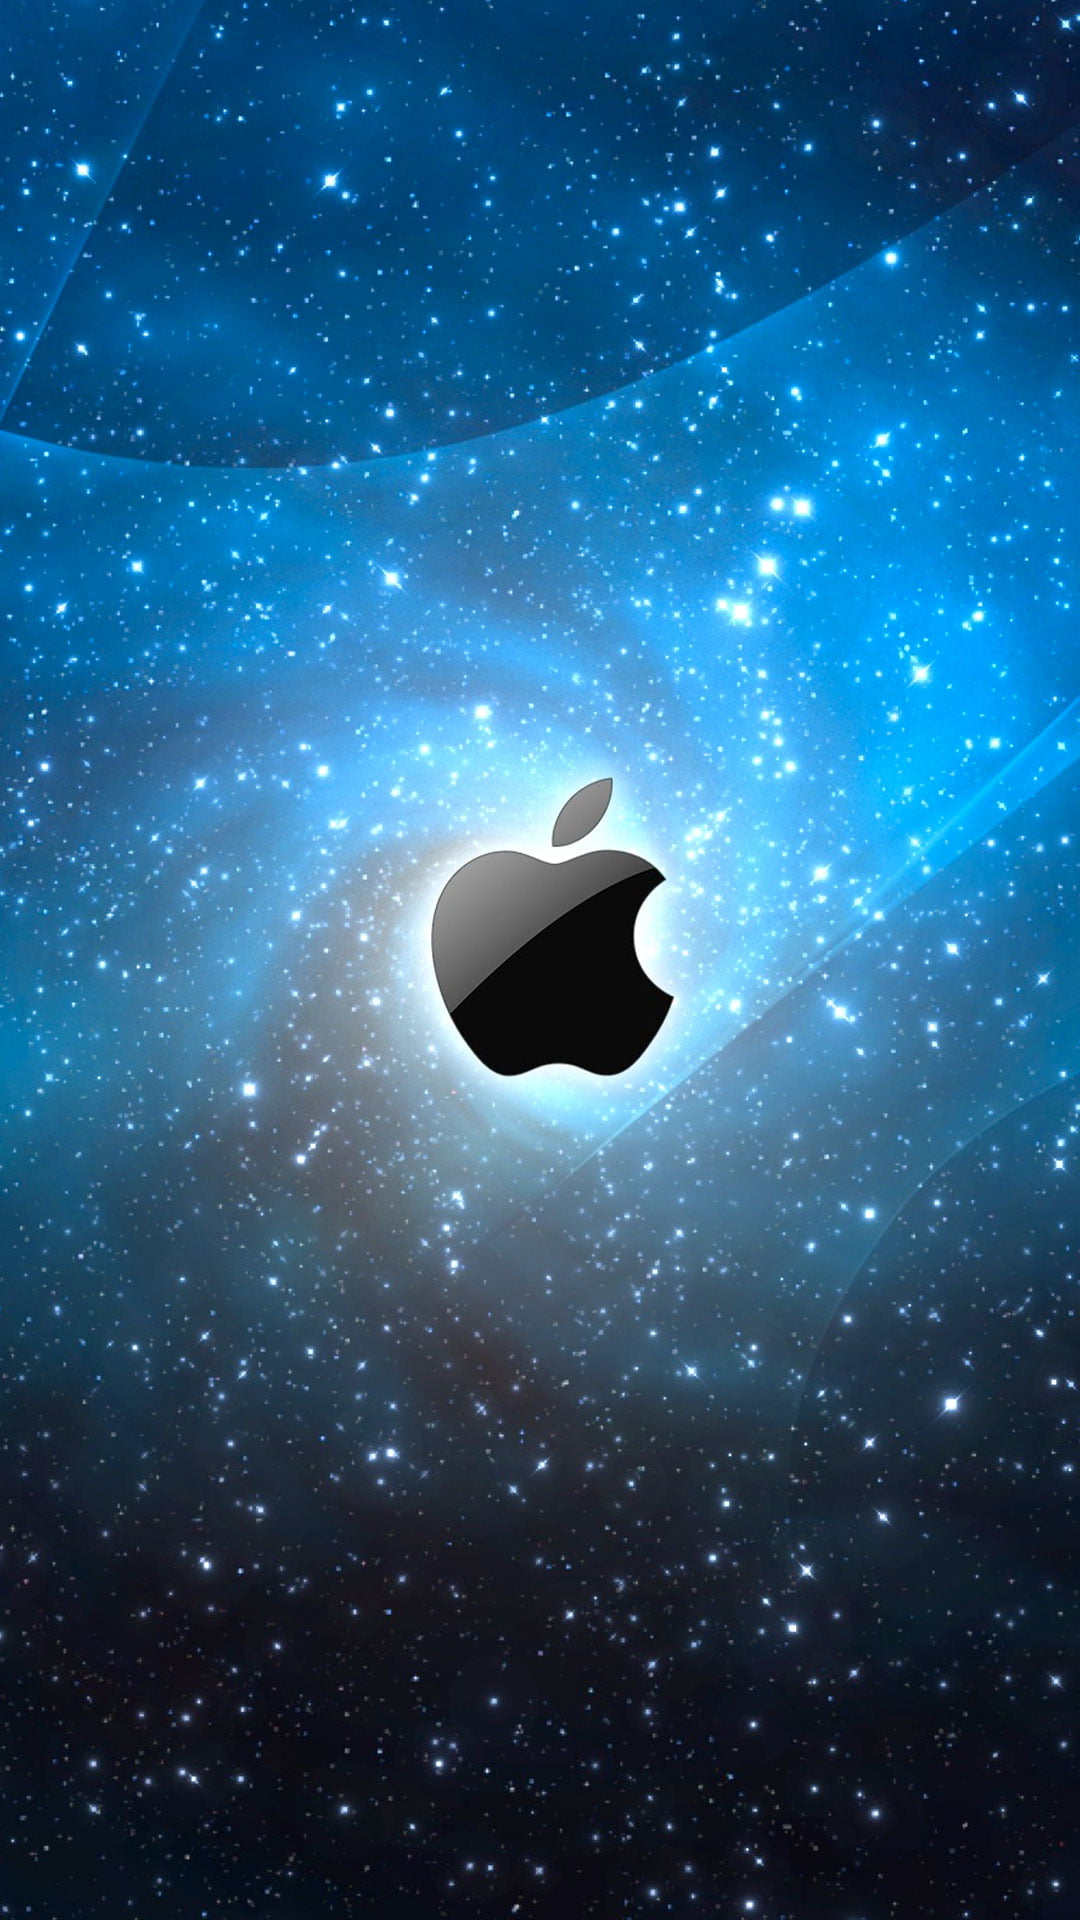 Apple-brand logo